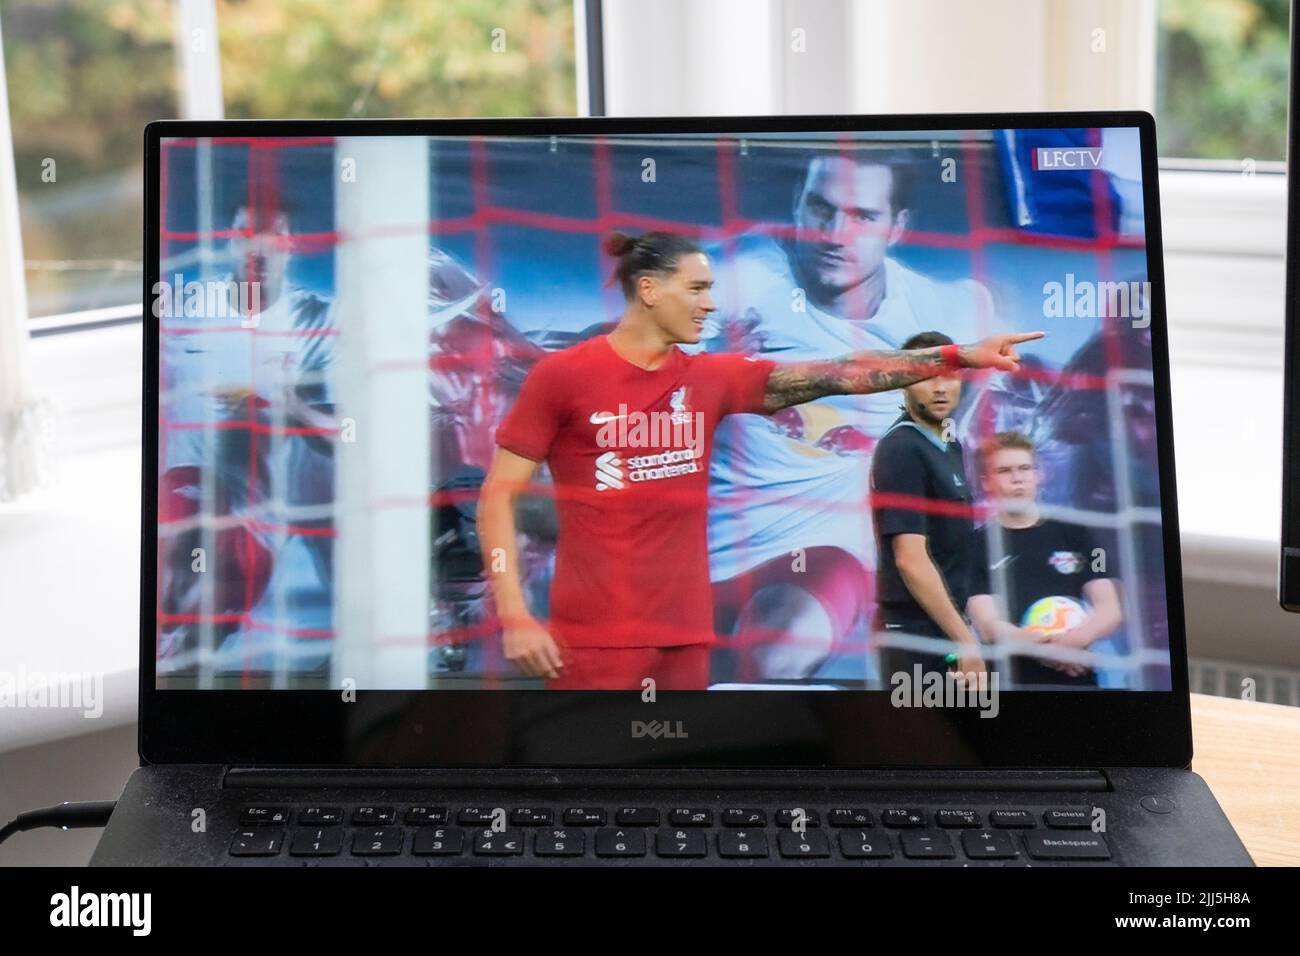 Darwin Nunez celebrates scoring a goal in the Liverpool FC 5-0 win vs RB Leipzig in the July 21 2022 pre season friendly on LFC TV on a laptop screen Stock Photo